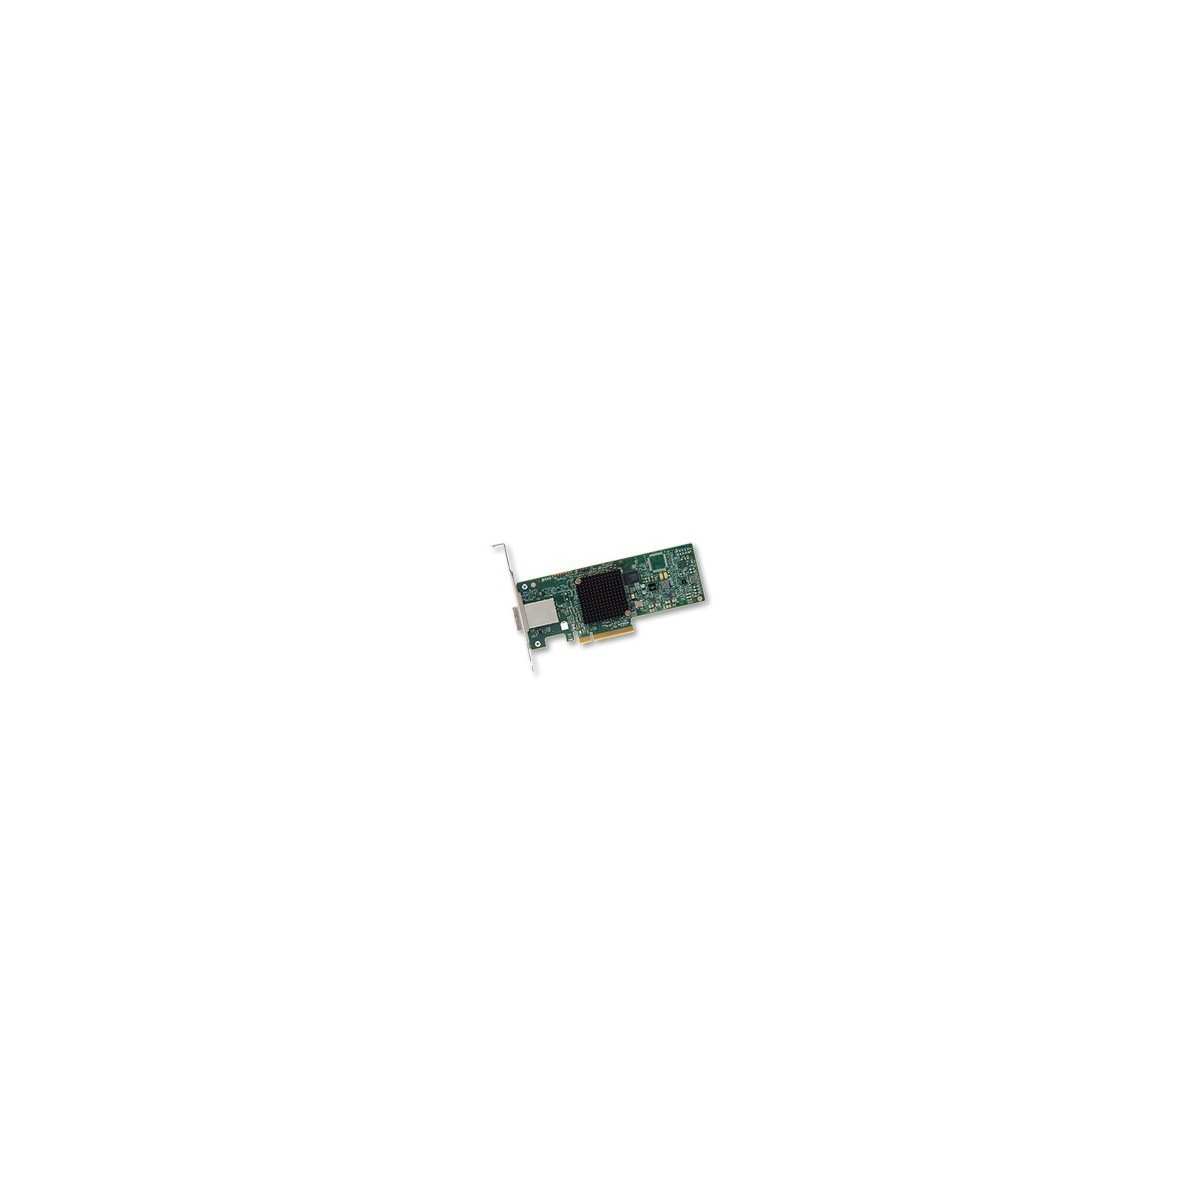 BROADCOM SAS 9300-8e - PCIe - Mini-SAS - Low-profile - PCIe 3.0 - Green - 2800000 h